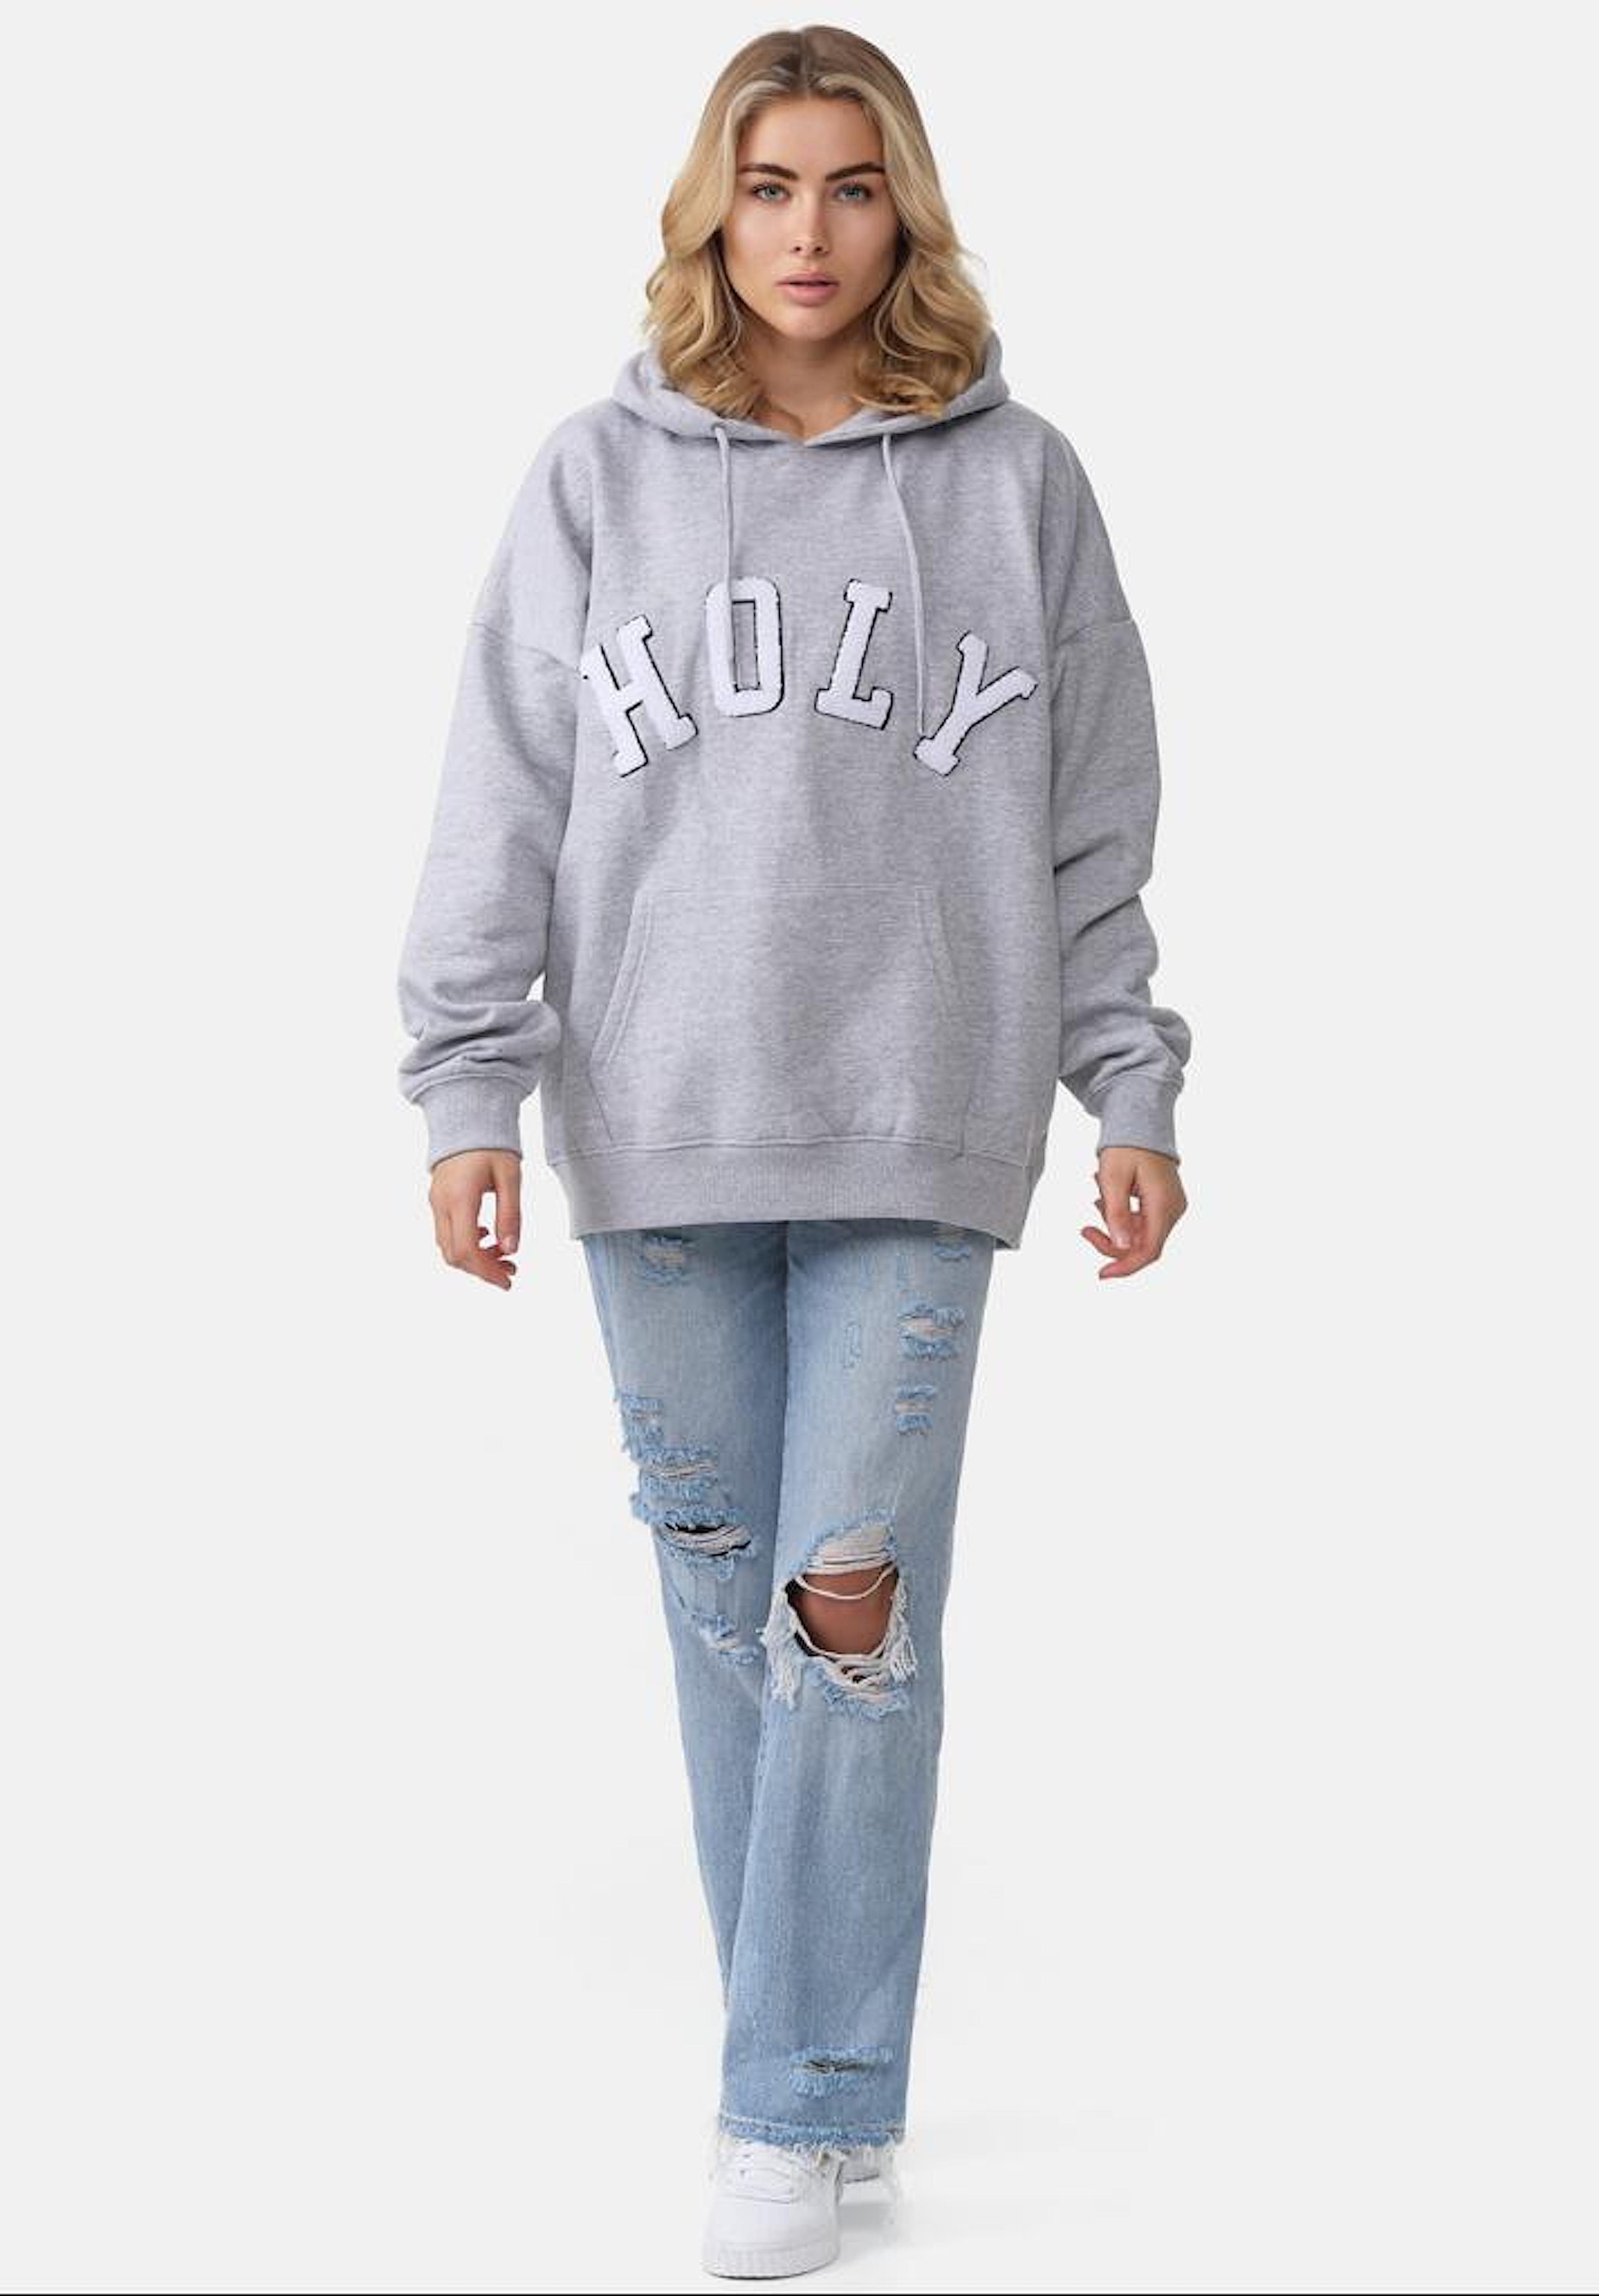 "HOLY" Hoodie Worldclassca Oversized Grau Hoodie Kapuzenpullover Sweatshirt Worldclassca